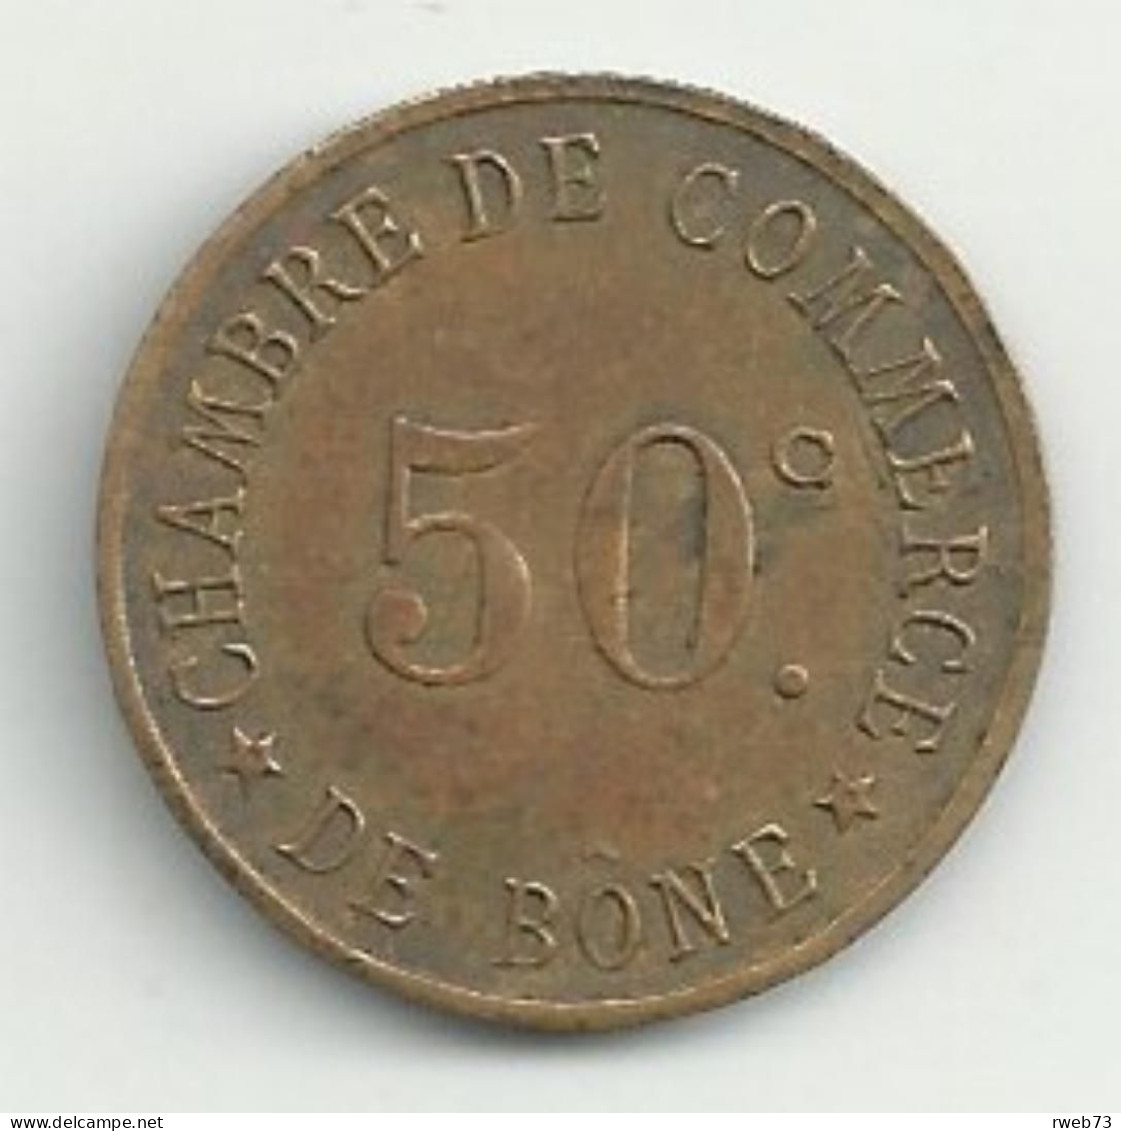 Nécessité - BONE - 50 Centimes - TB/TTB - Monetary /of Necessity